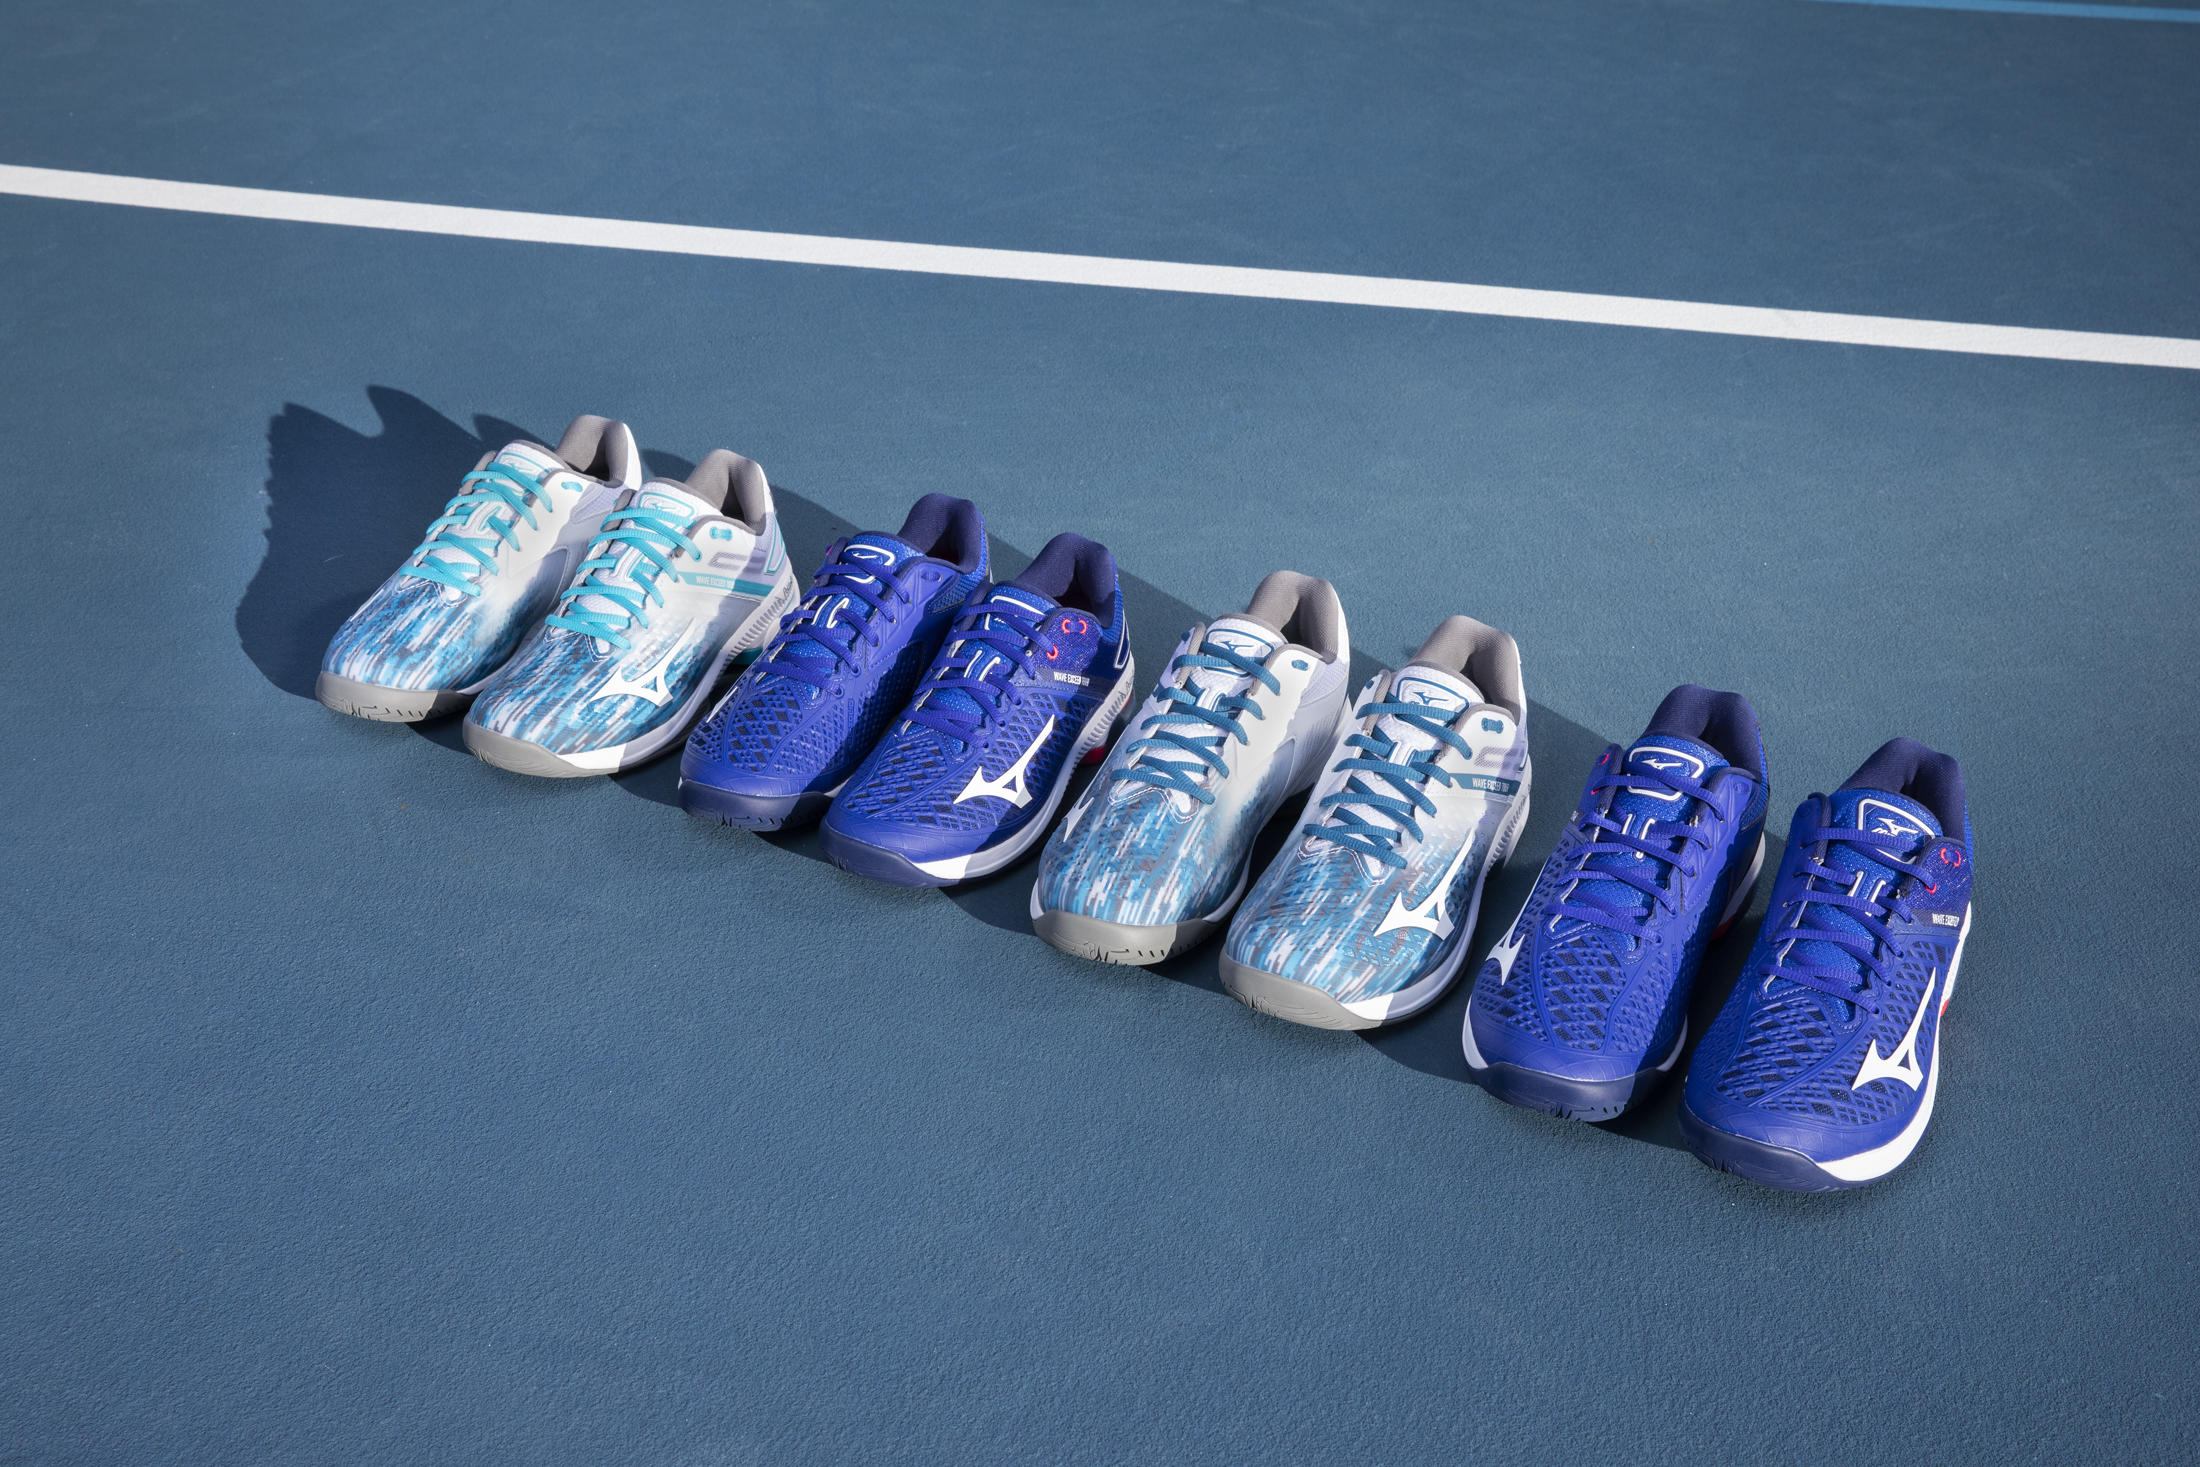 28cm Details about   MIZUNO Tennis Shoes WAVE EXCEED TOUR 4 OC 61GB2072 Blue US10 